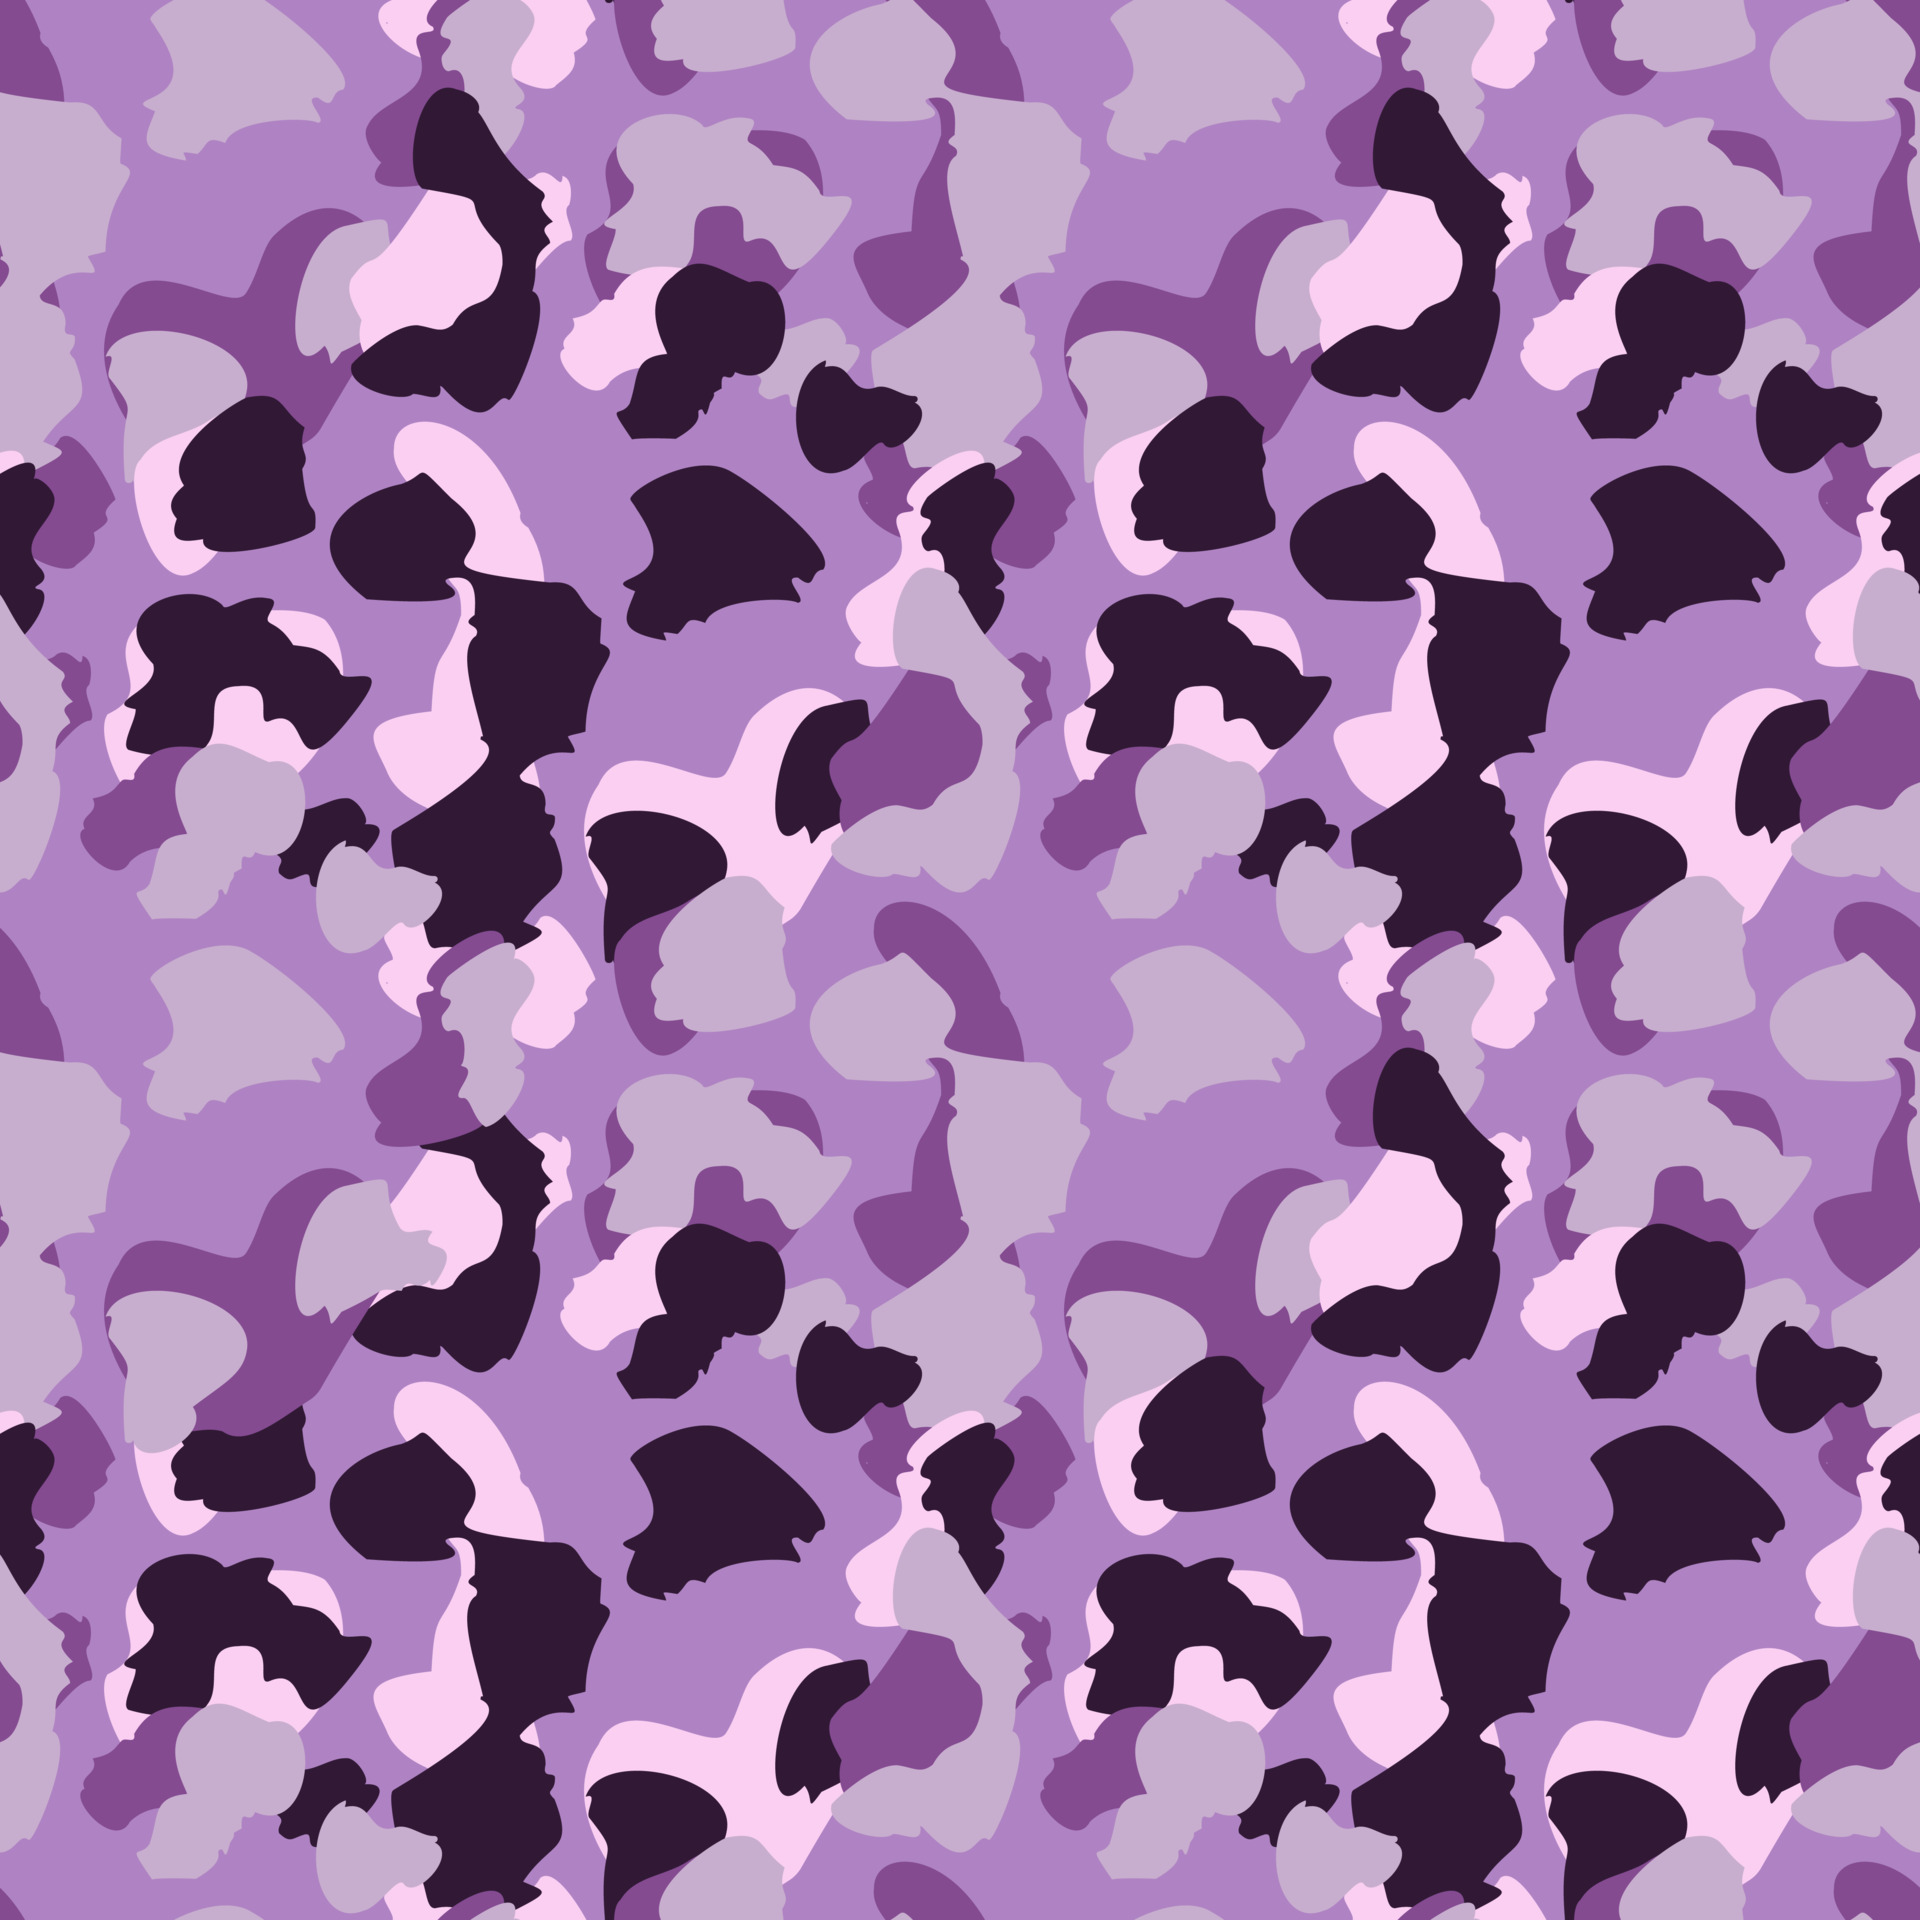 Creative cheetah camouflage seamless pattern. Camo leopard